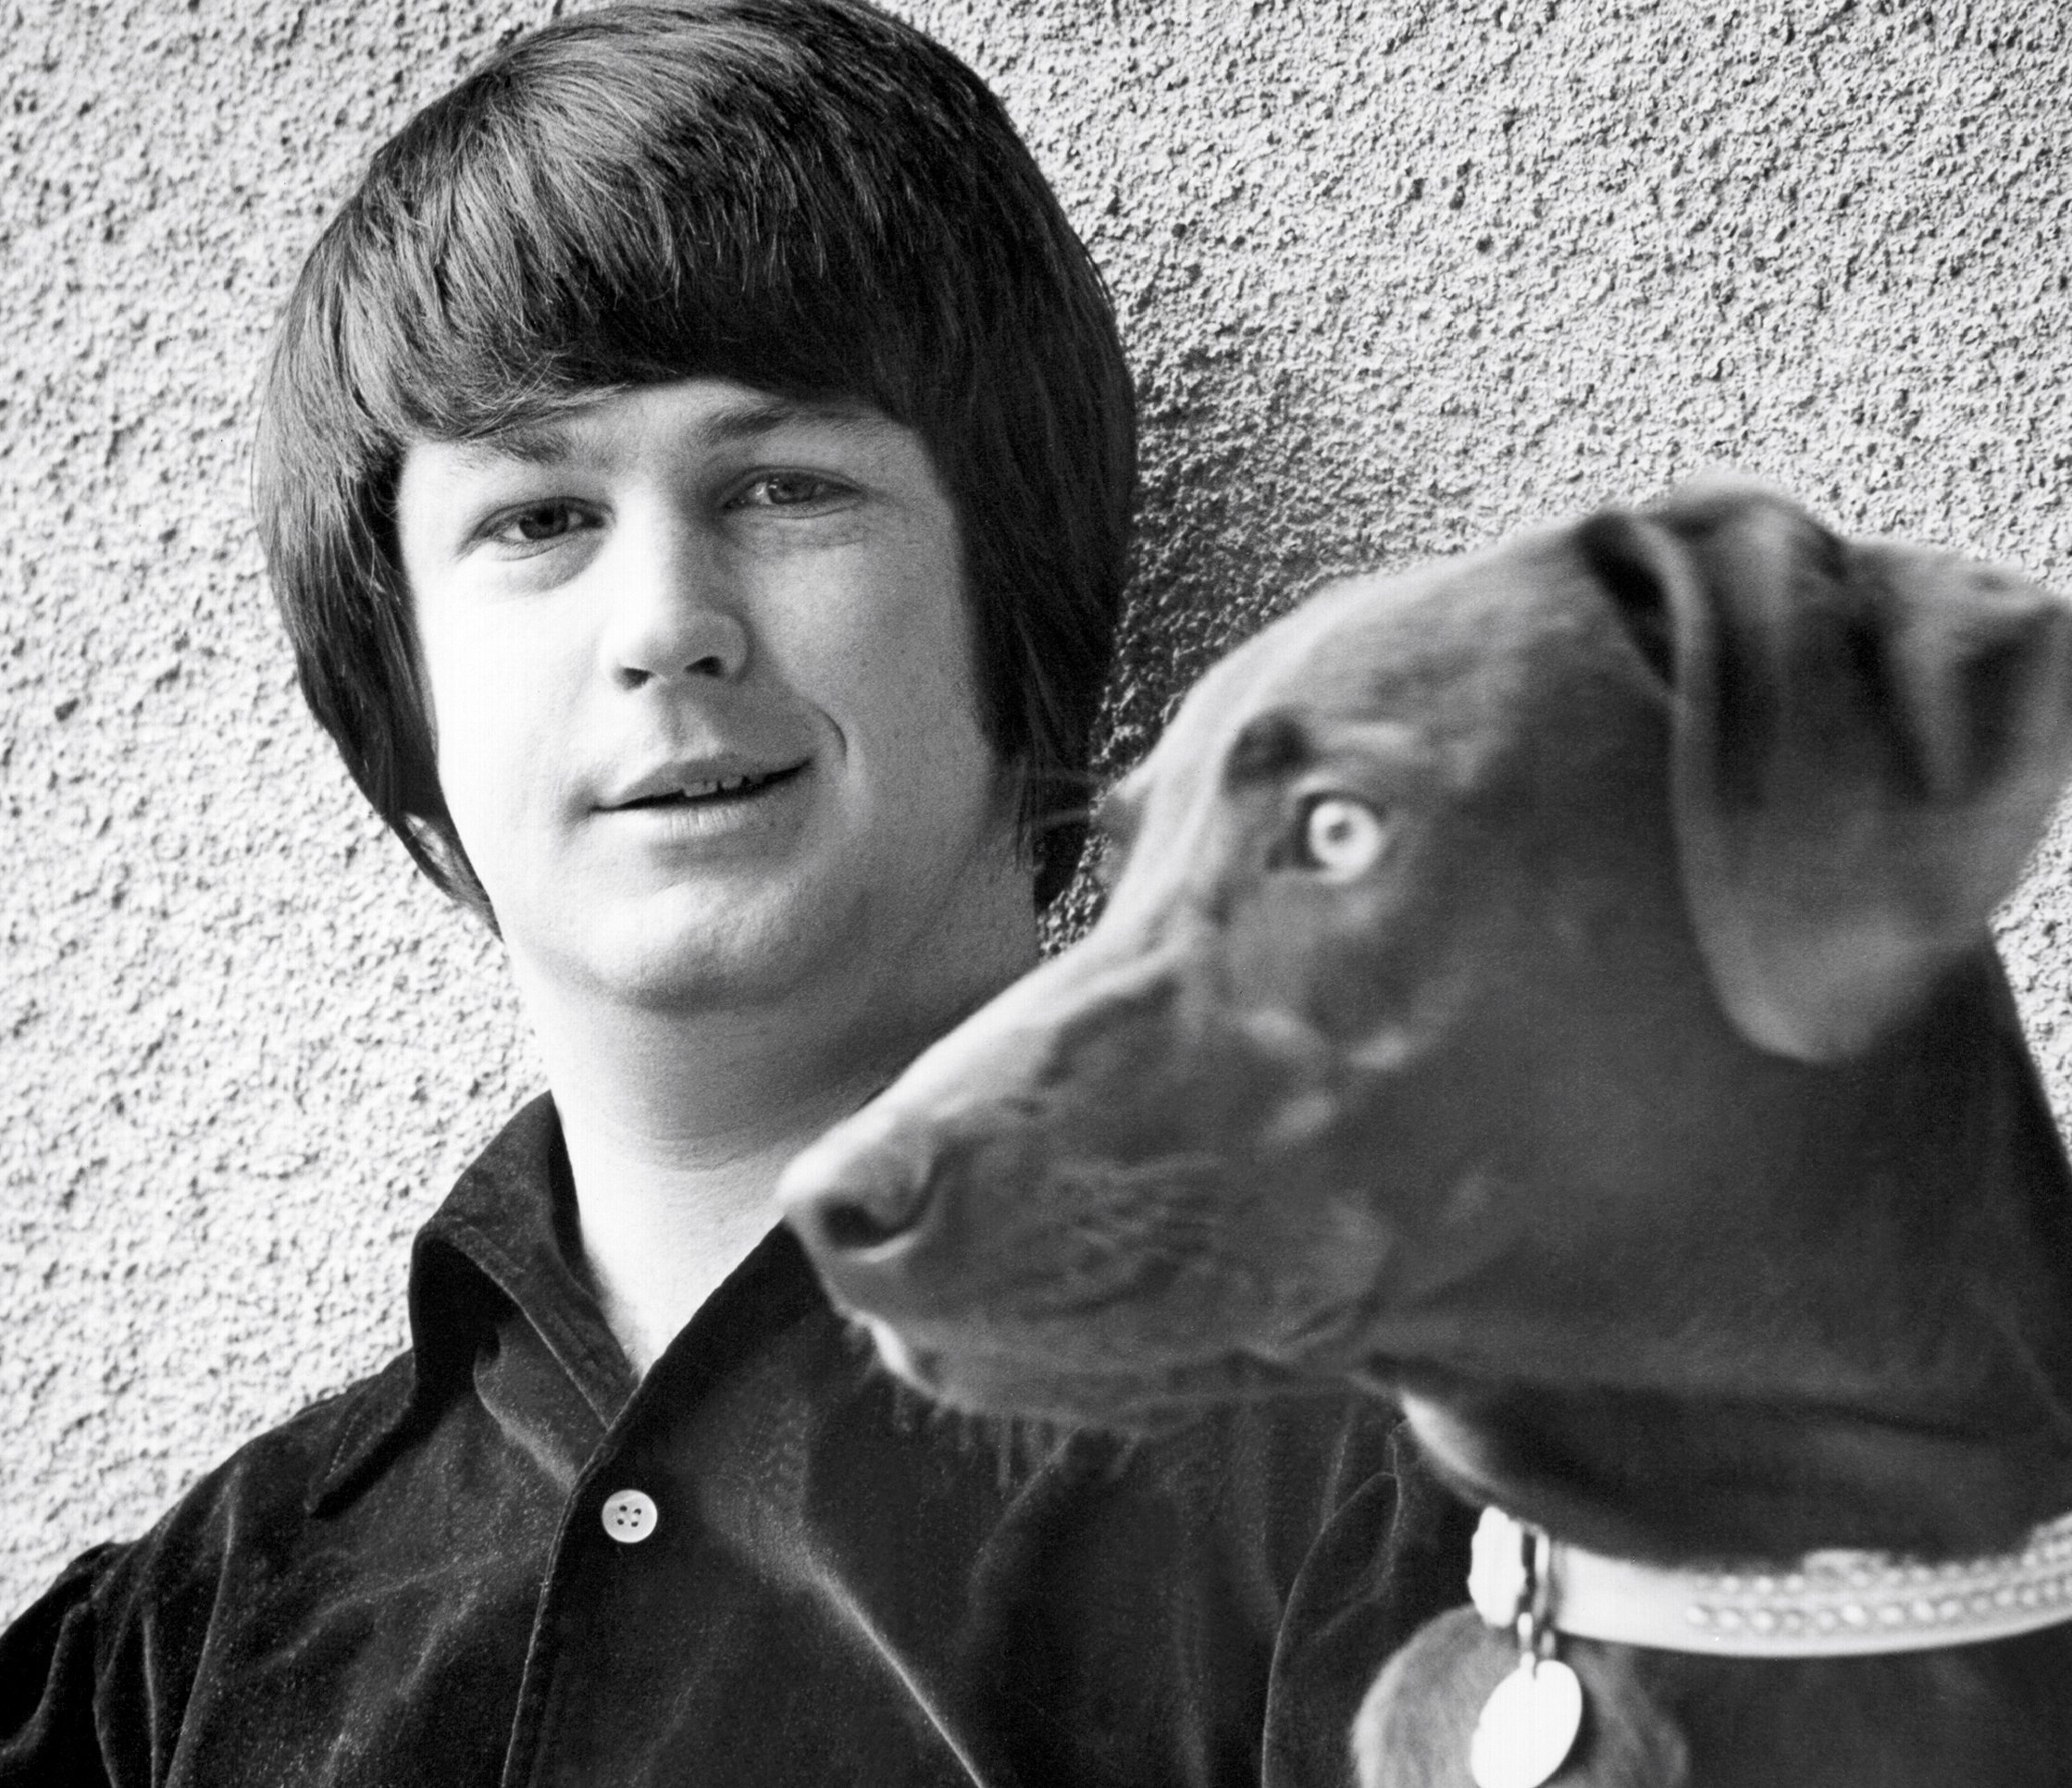 The Beach Boy's Brian Wilson next to a dog